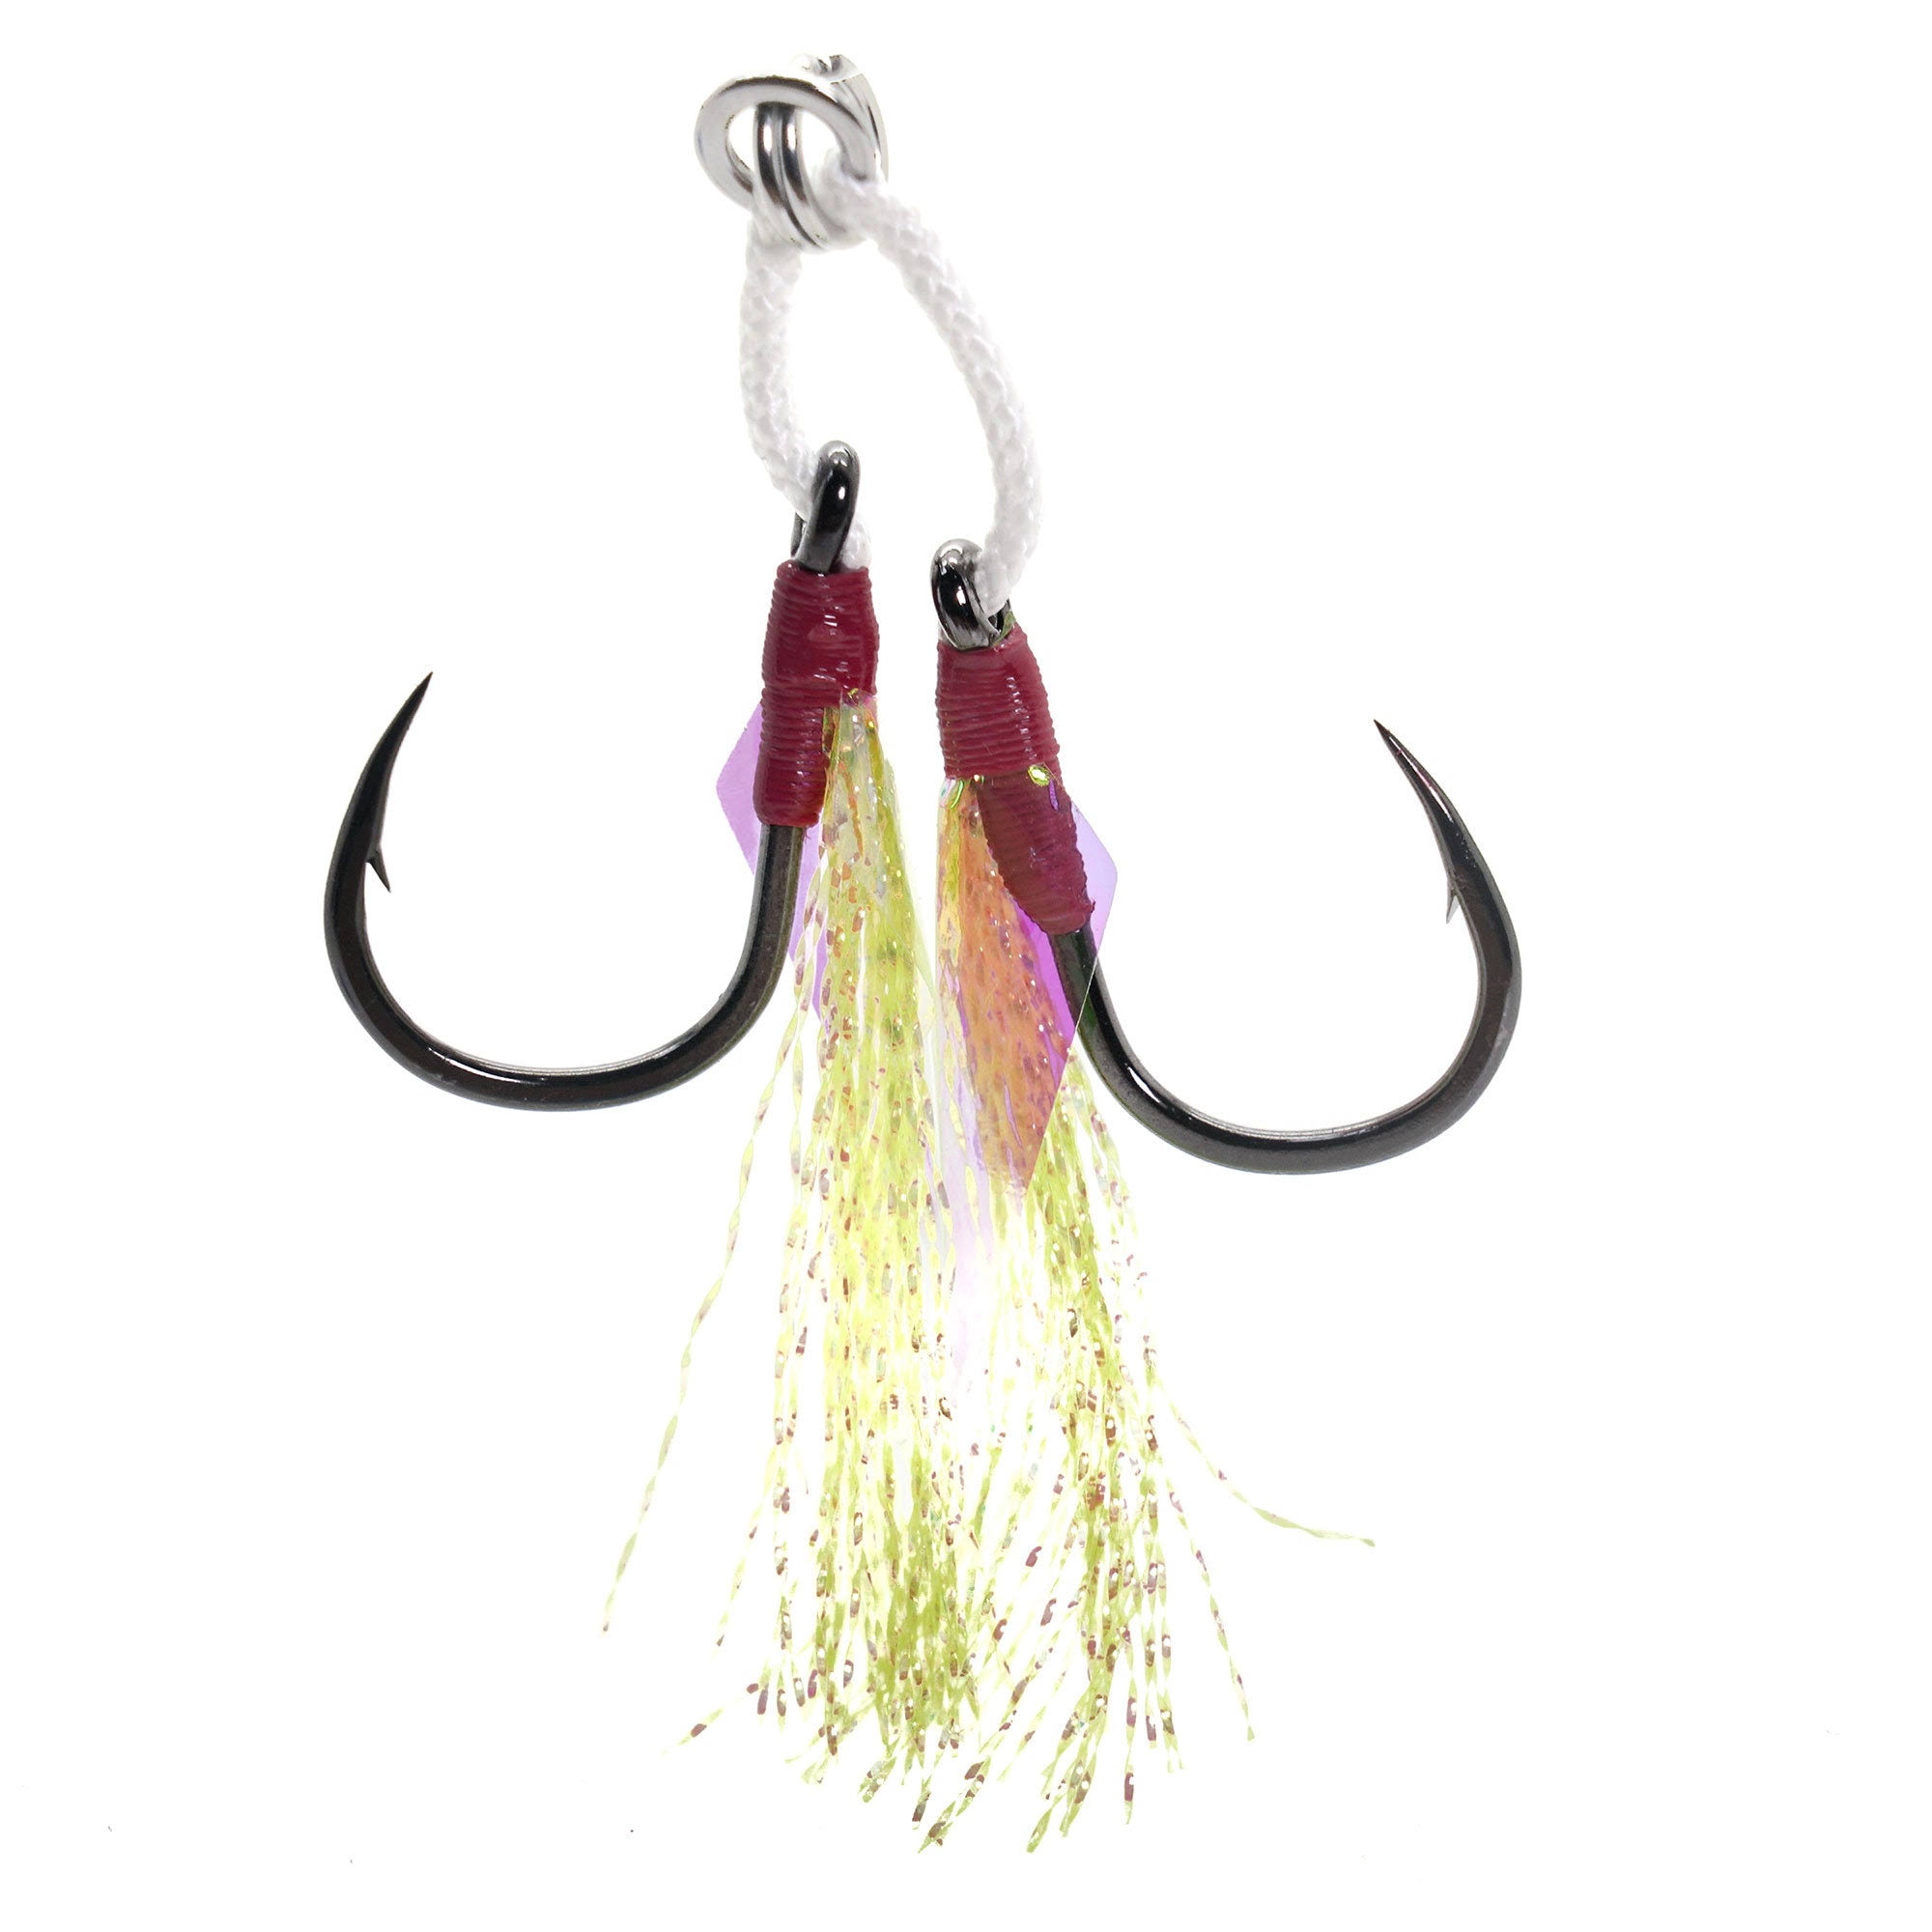 2 Pack of Mustad Light Jig Assist Hooks - Double Hook Fishing Rigs